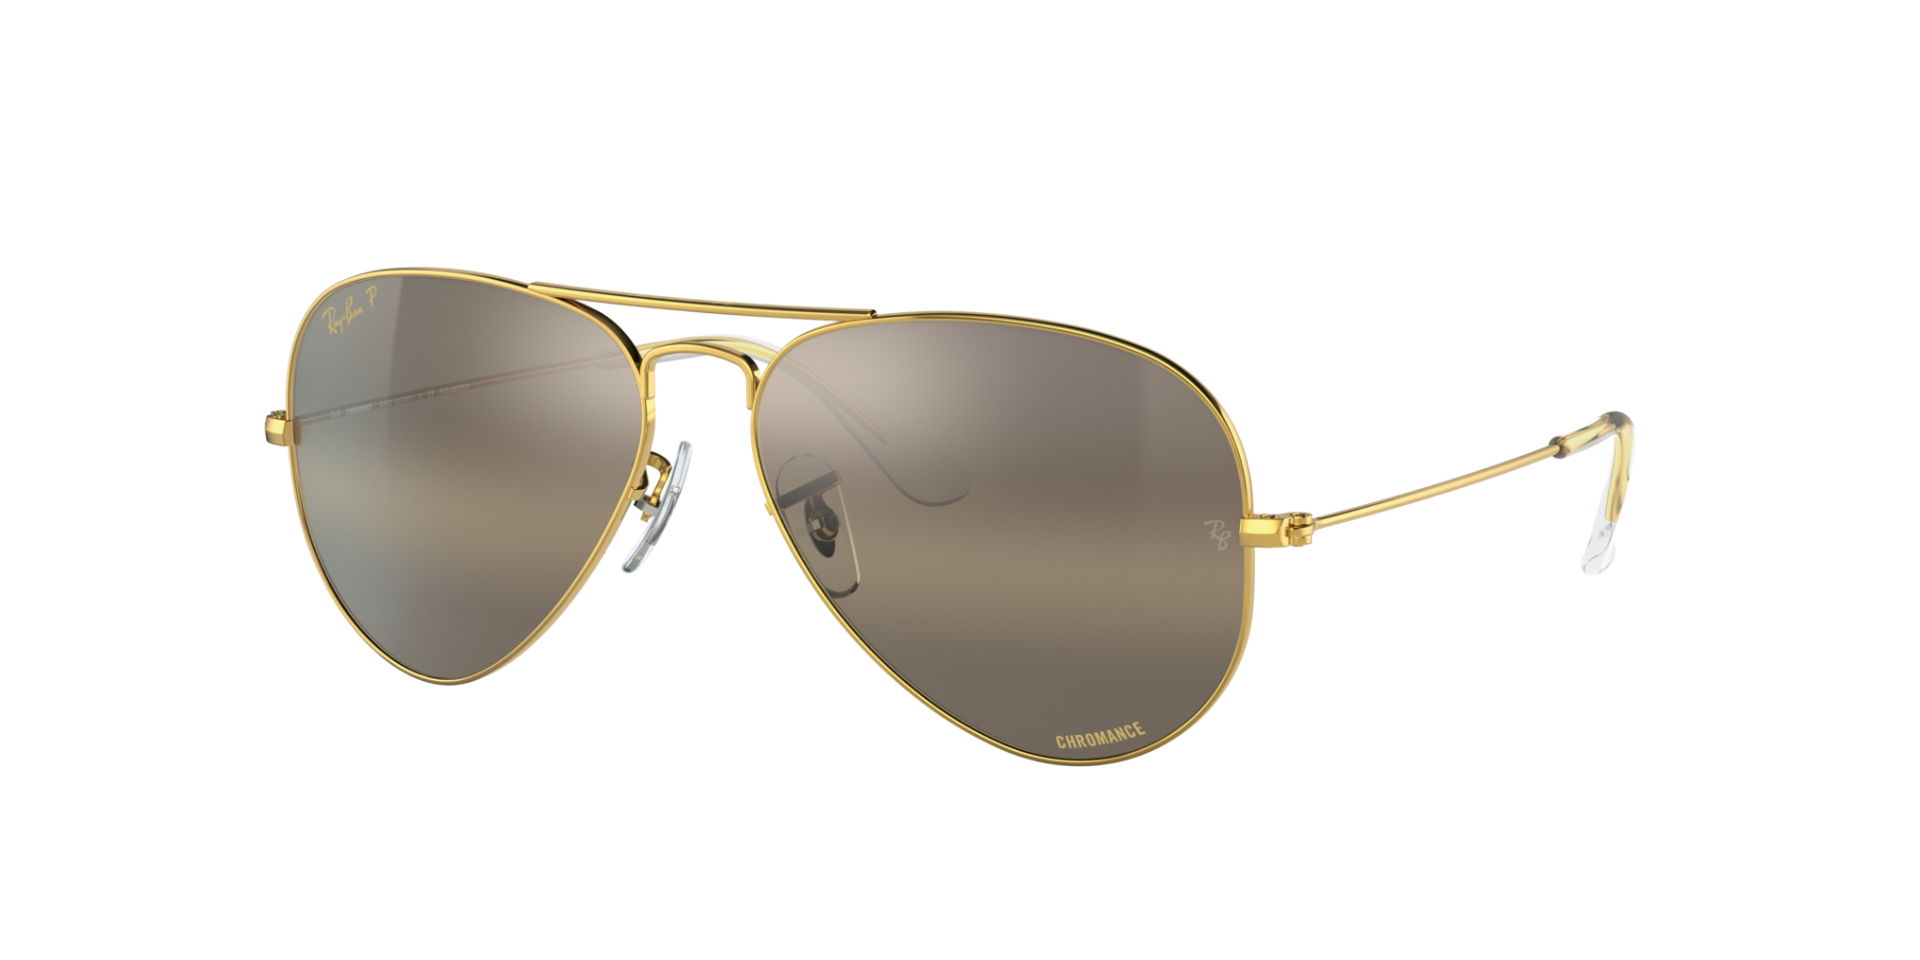 Buy Aviator Chromance Sunglasses Online at Ray-Ban